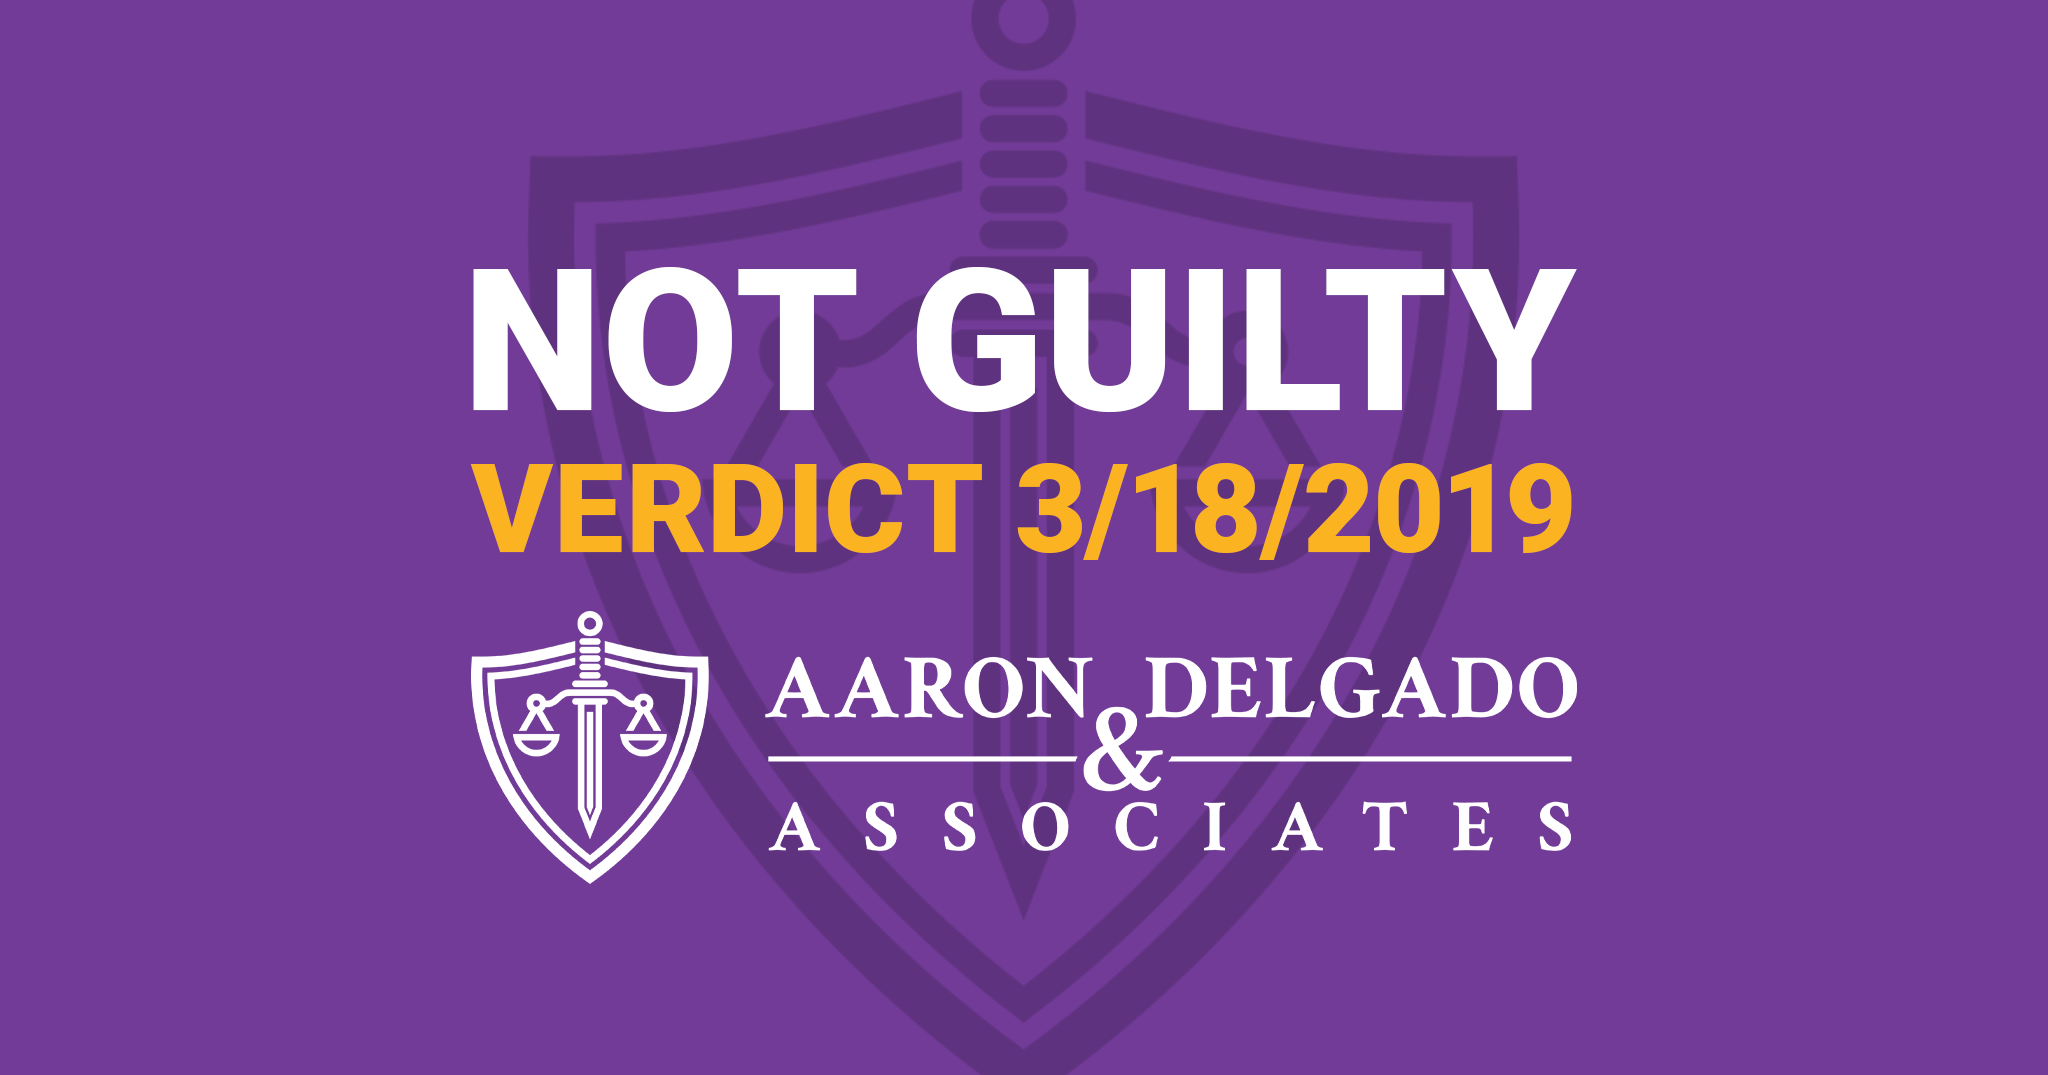 Aaron Delgado & Associates not guilty verdict